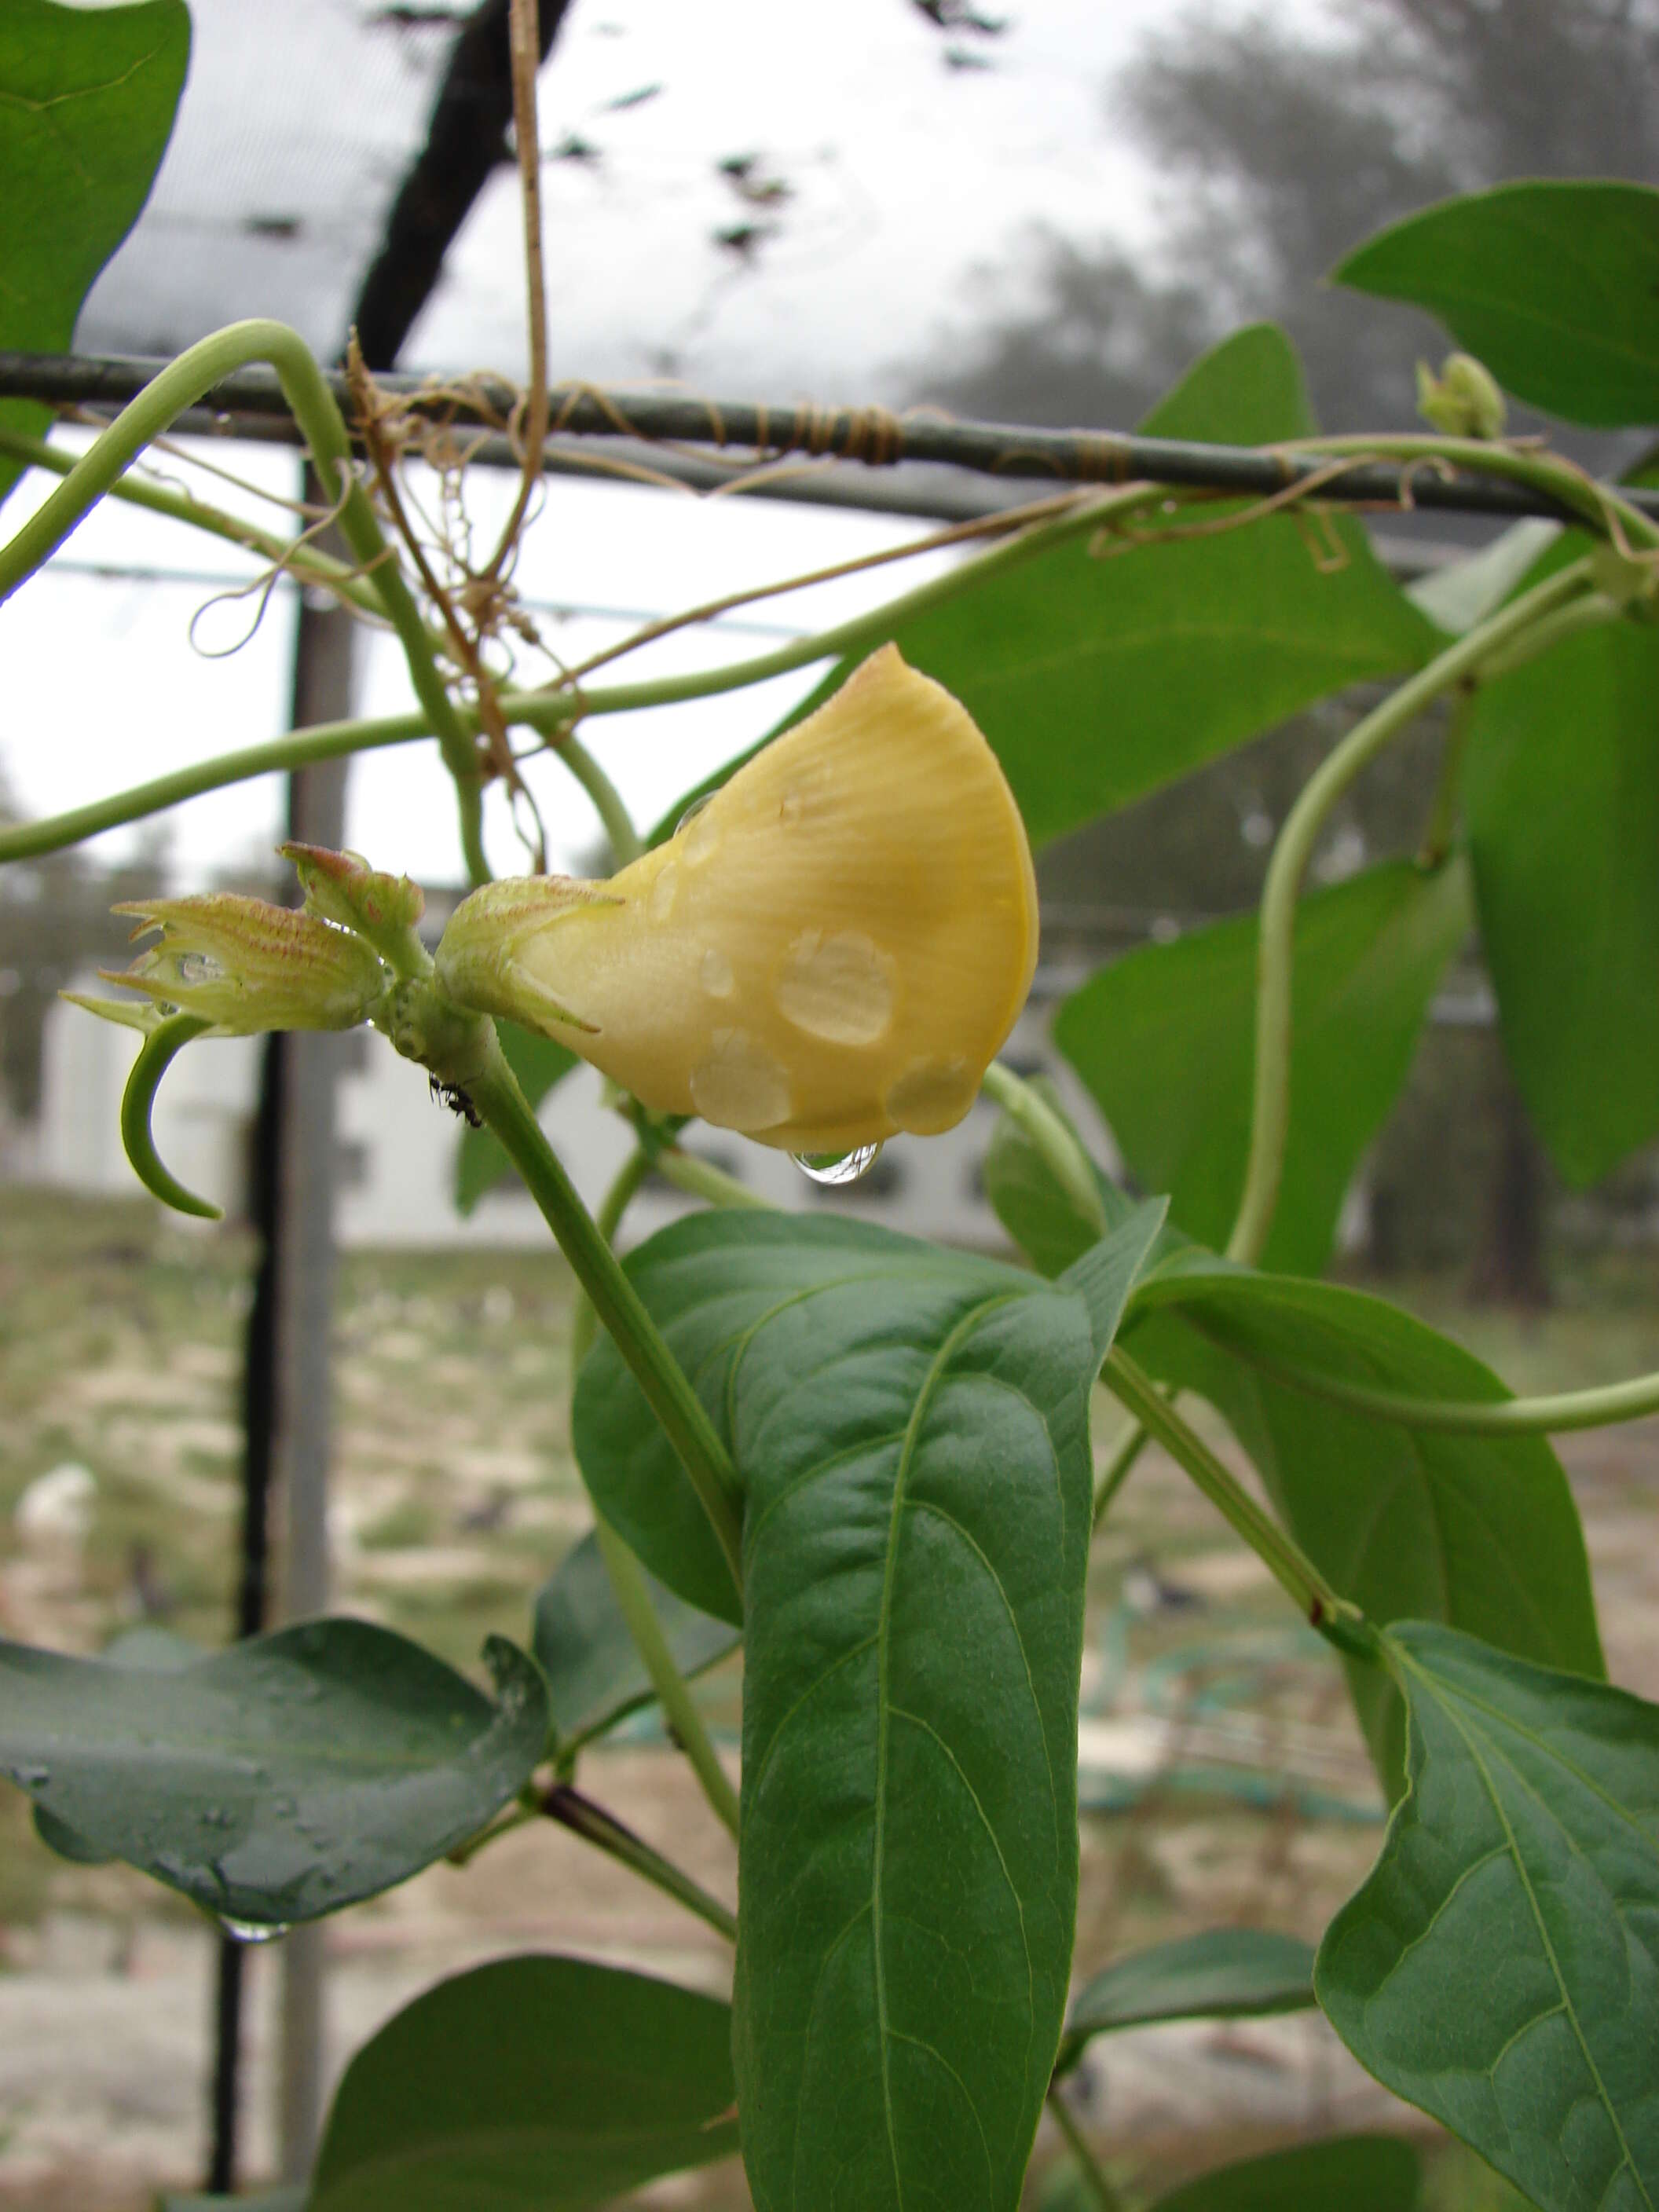 Image of blackeyed pea